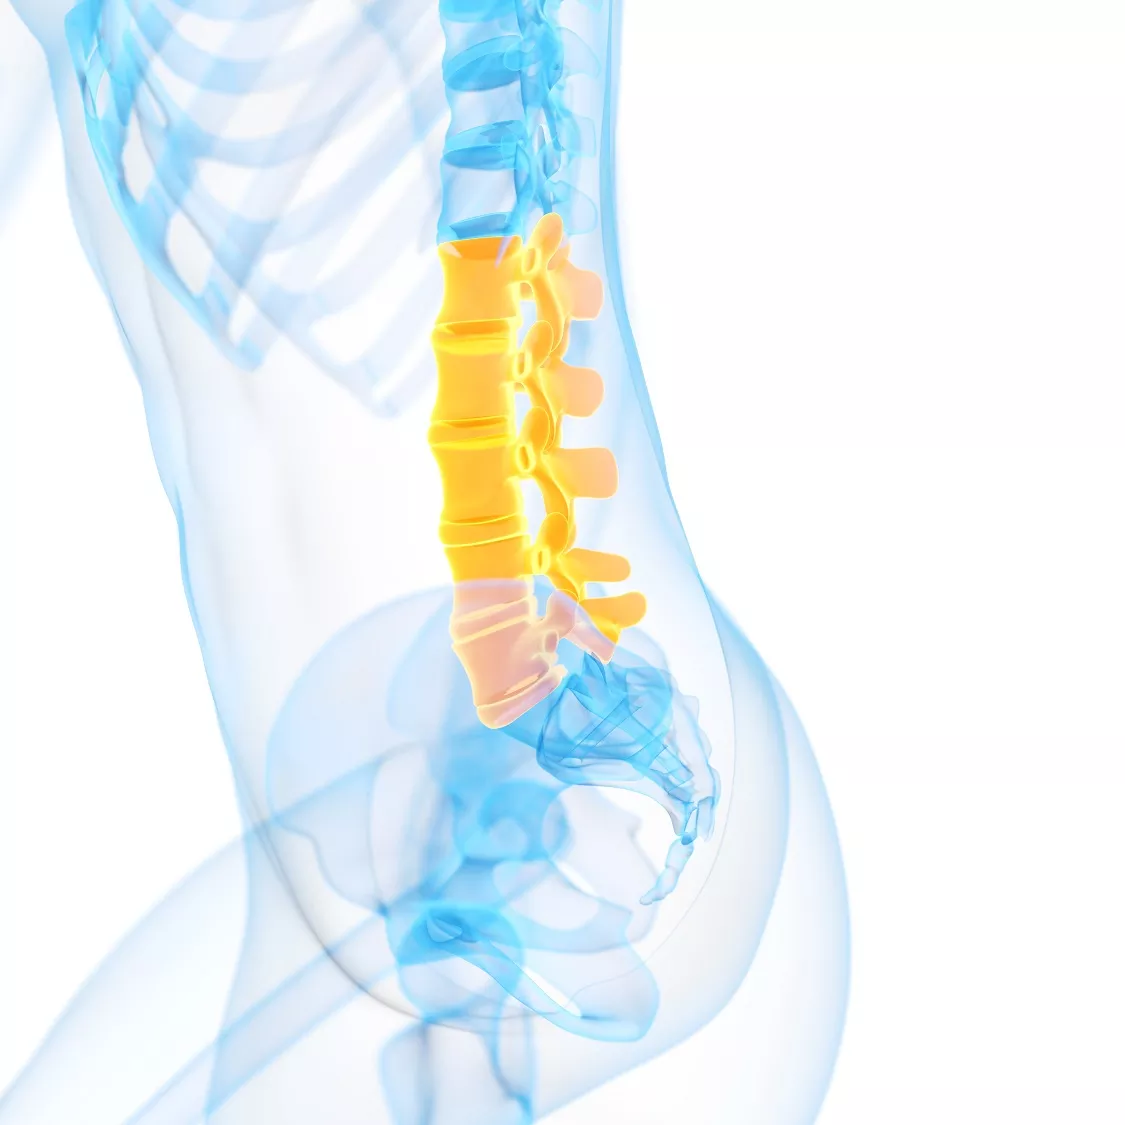 Lumbar spine, illustration of Laminectomy